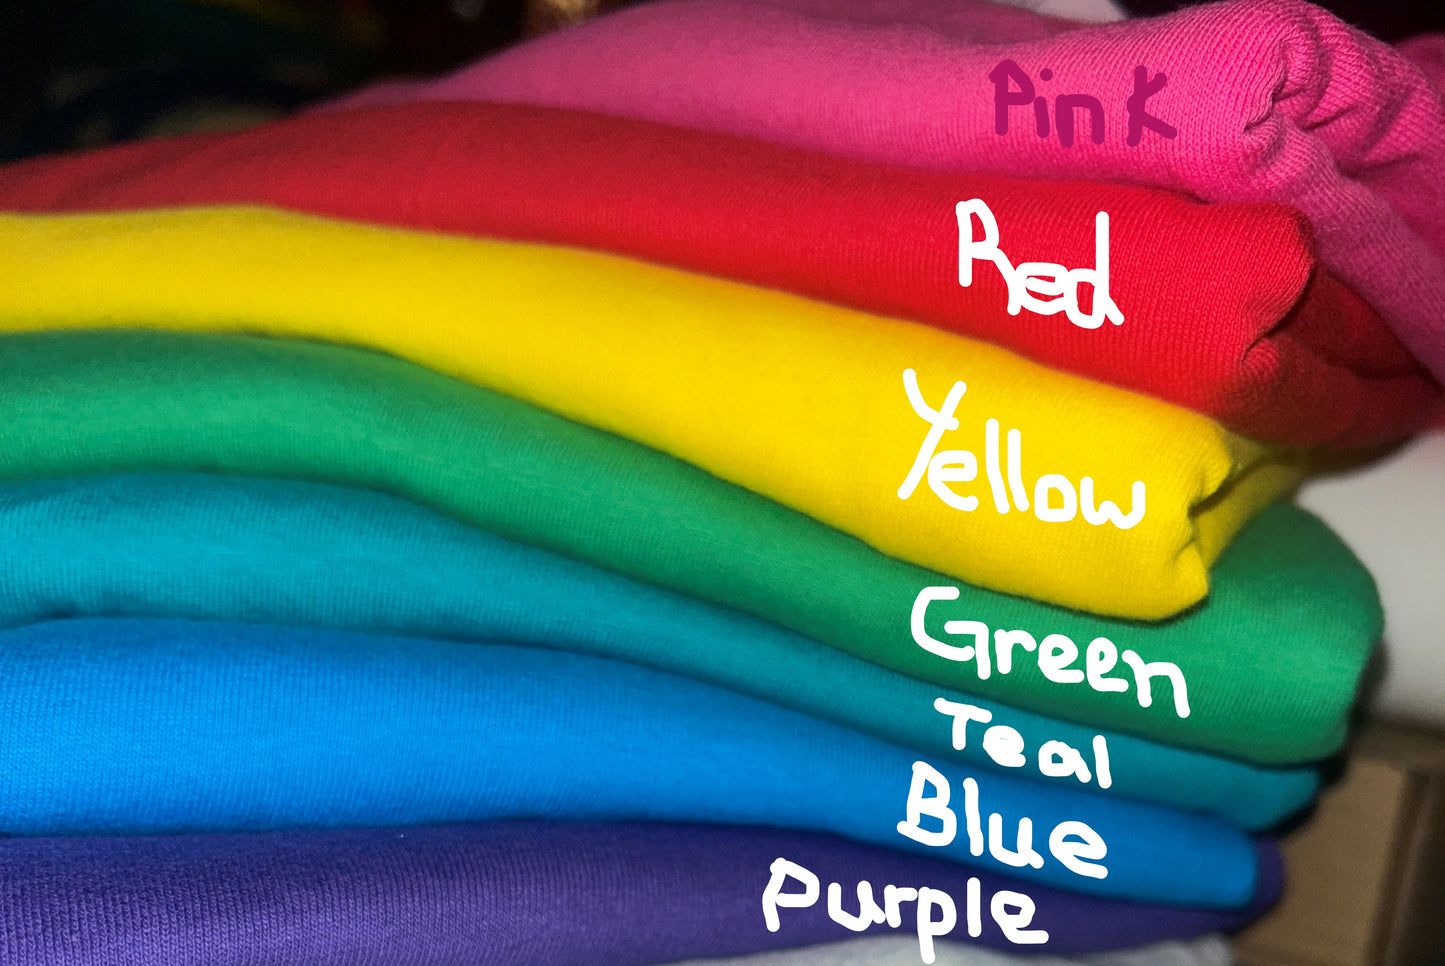 You good bro T-shirt: Bright Colors/ Black Design